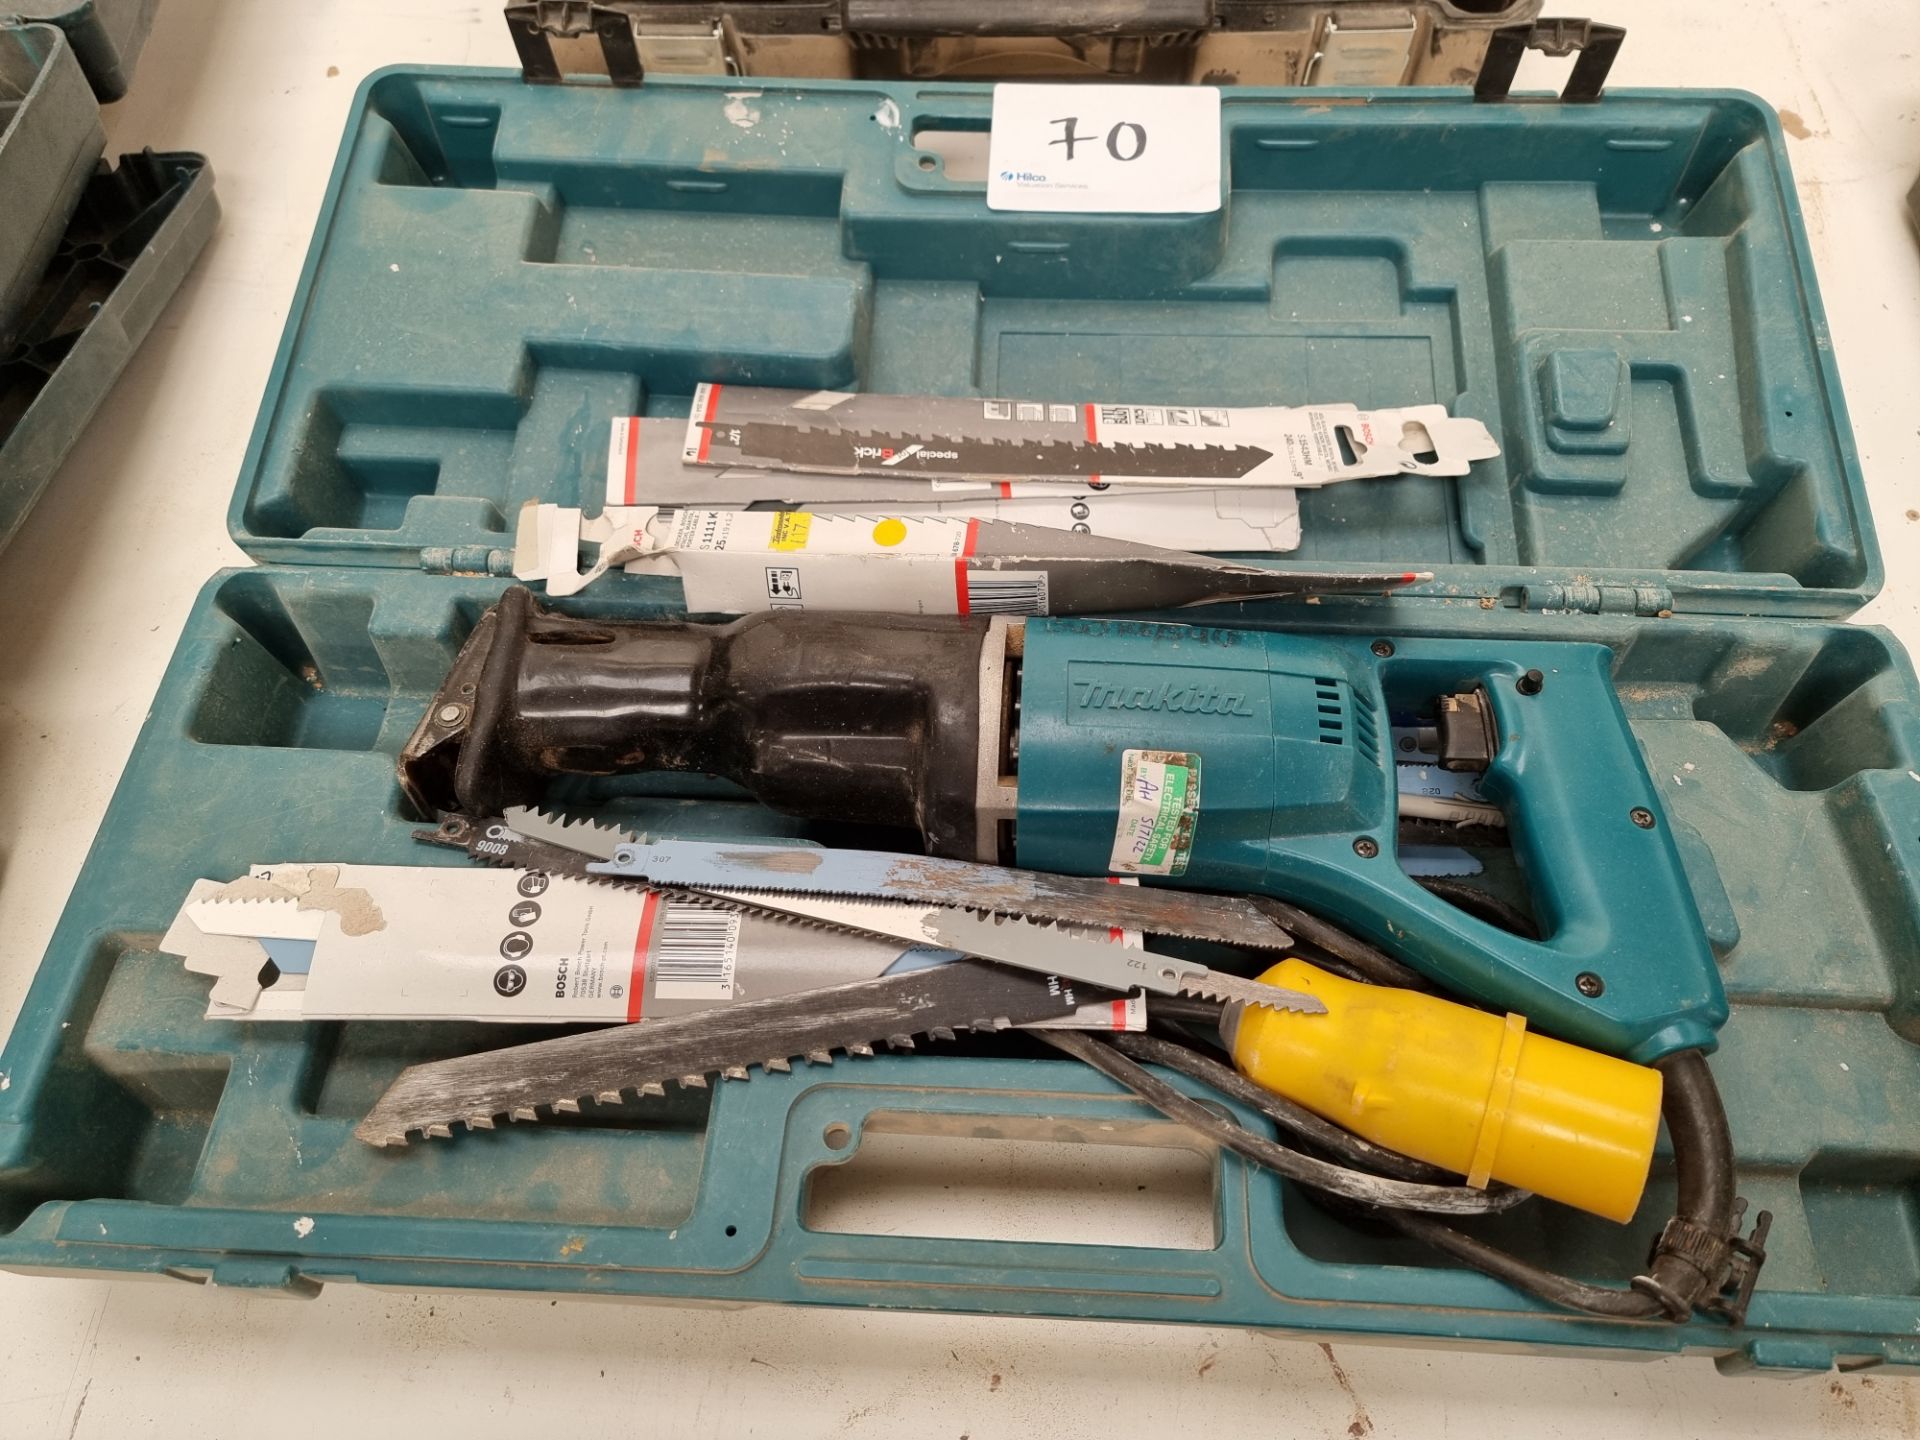 1: Makita JR3000V Corded Reciprocating Saw, with spares and box